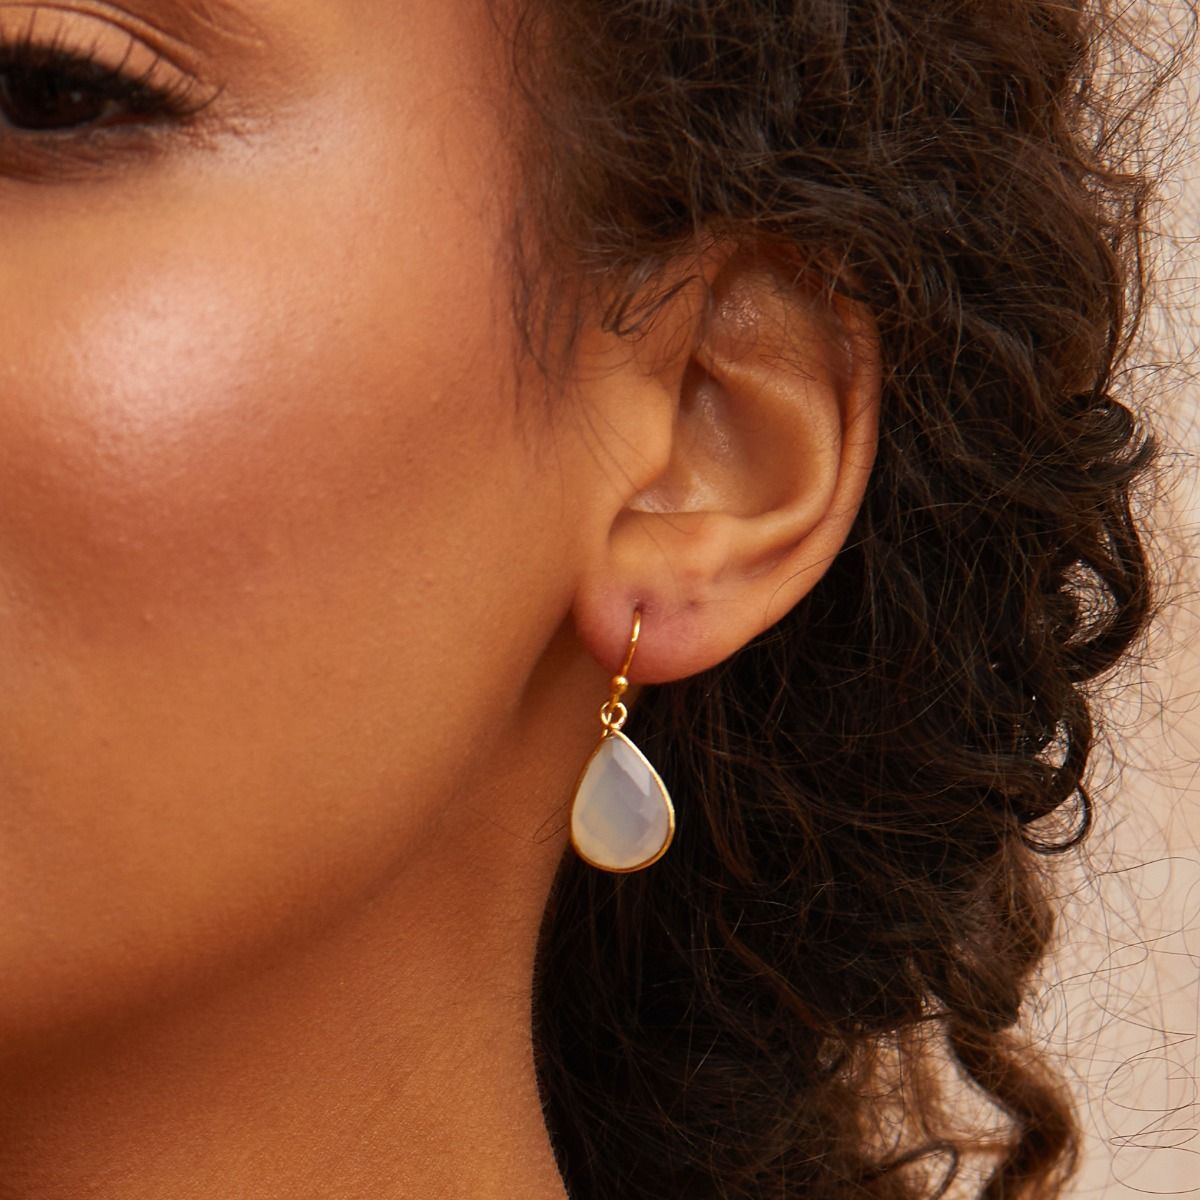 White Chalcedony earrings